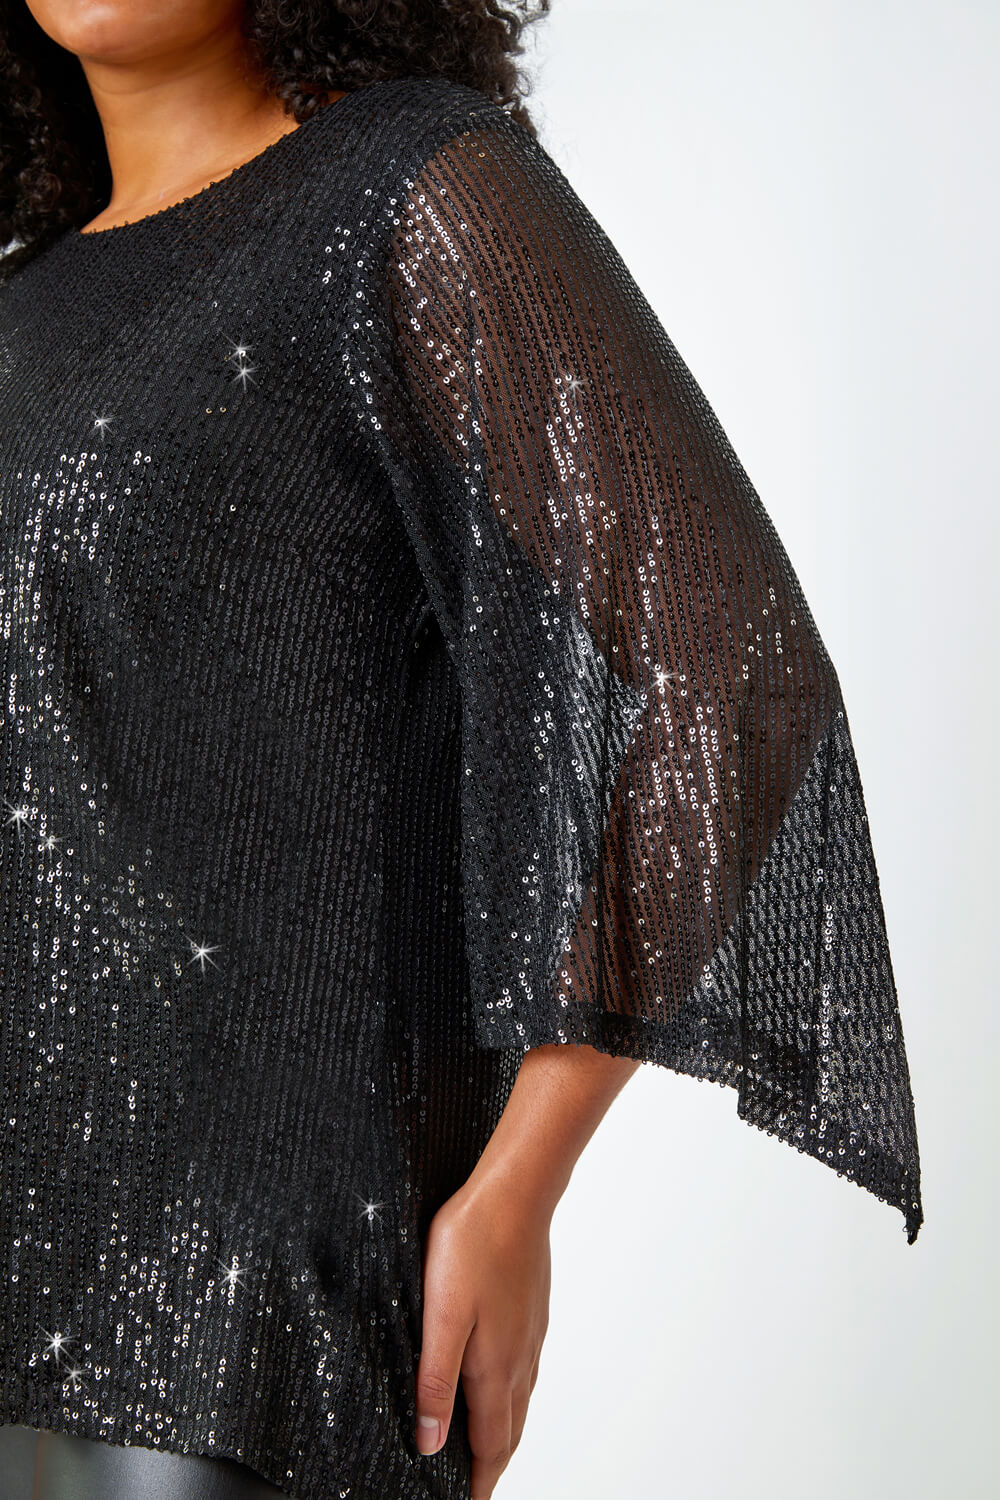 Black Curve Sheer Sleeve Sequin Top, Image 5 of 7